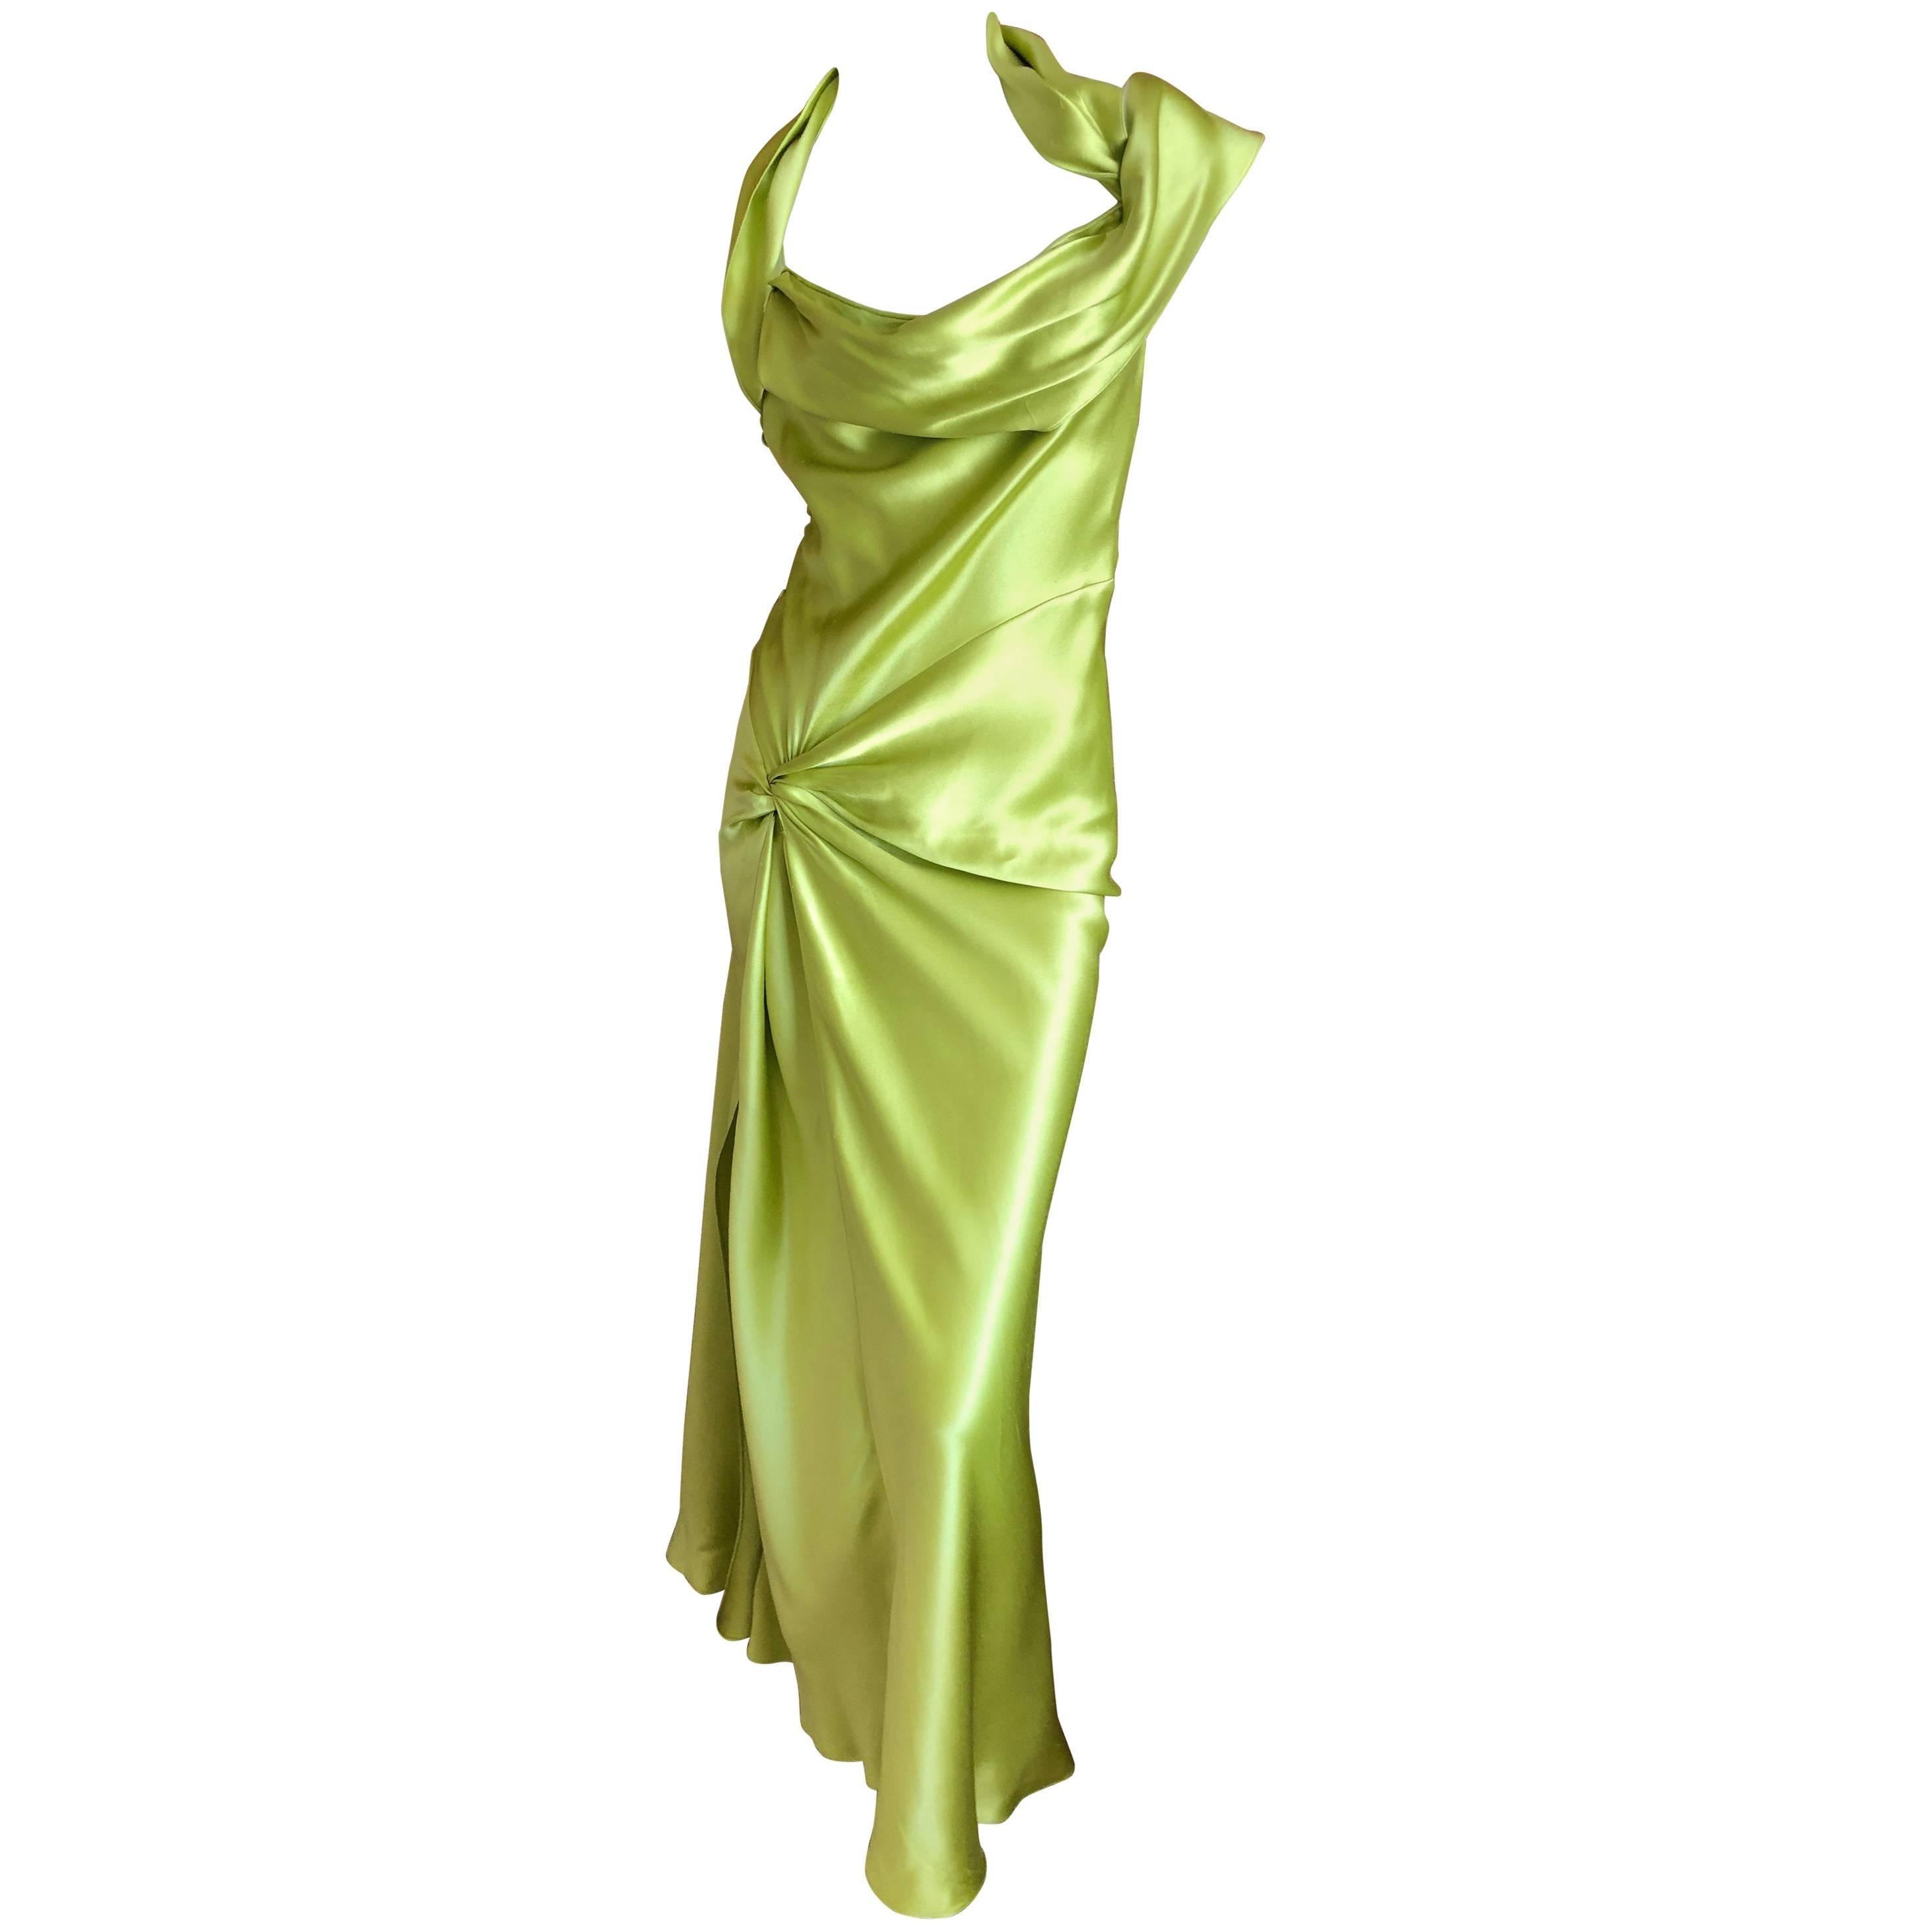 Christian Dior by John Galliano Bias Cut Green Silk Satin Dress with Knot Motif